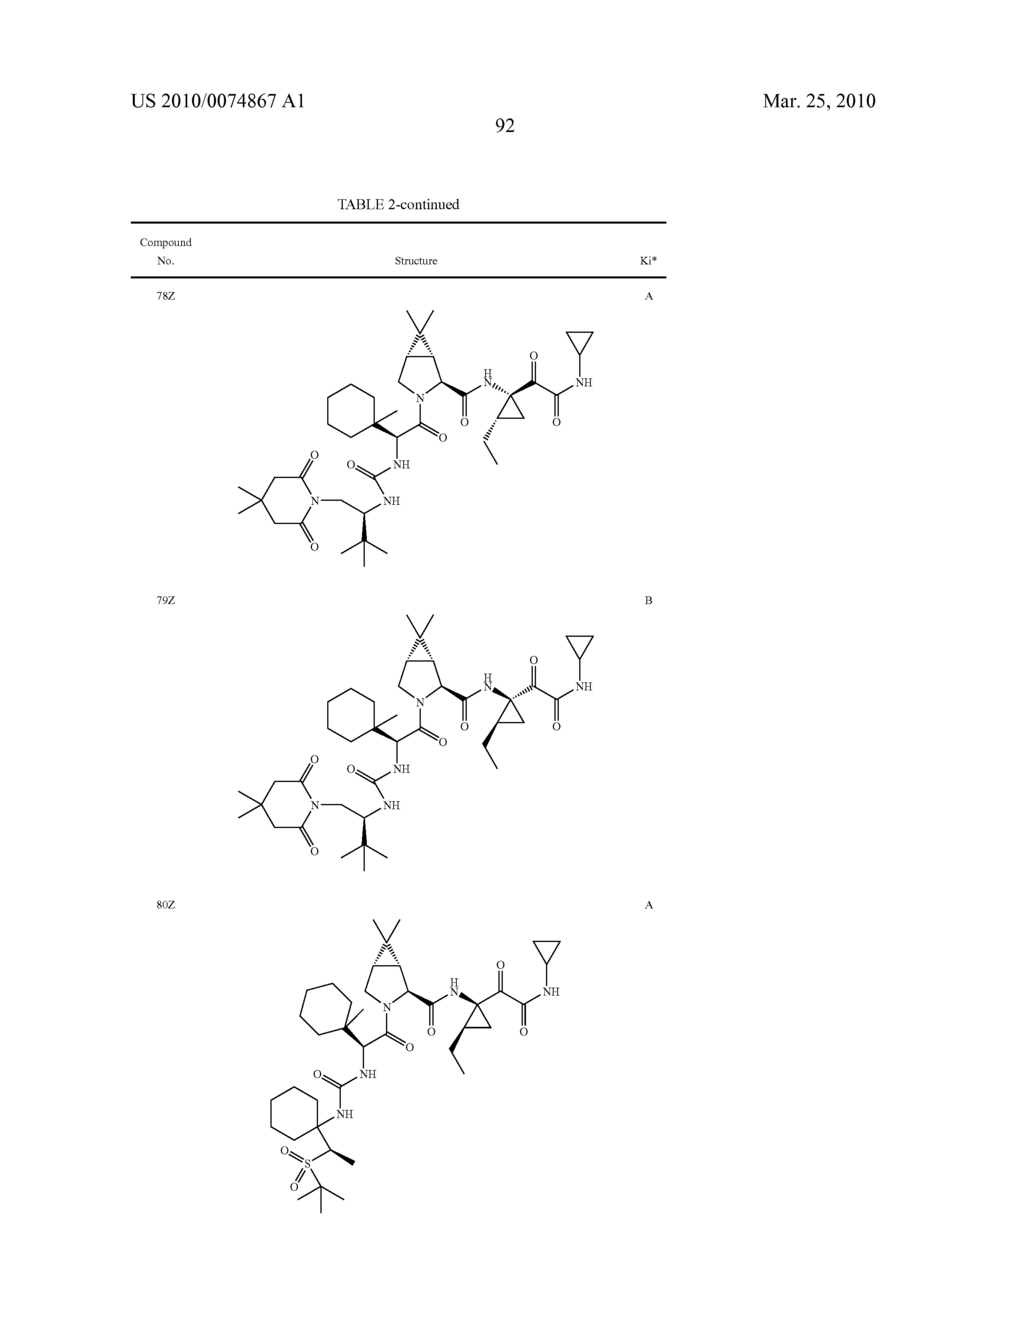 P1-NONEPIMERIZABLE KETOAMIDE INHIBITORS OF HCV NS3 PROTEASE - diagram, schematic, and image 93